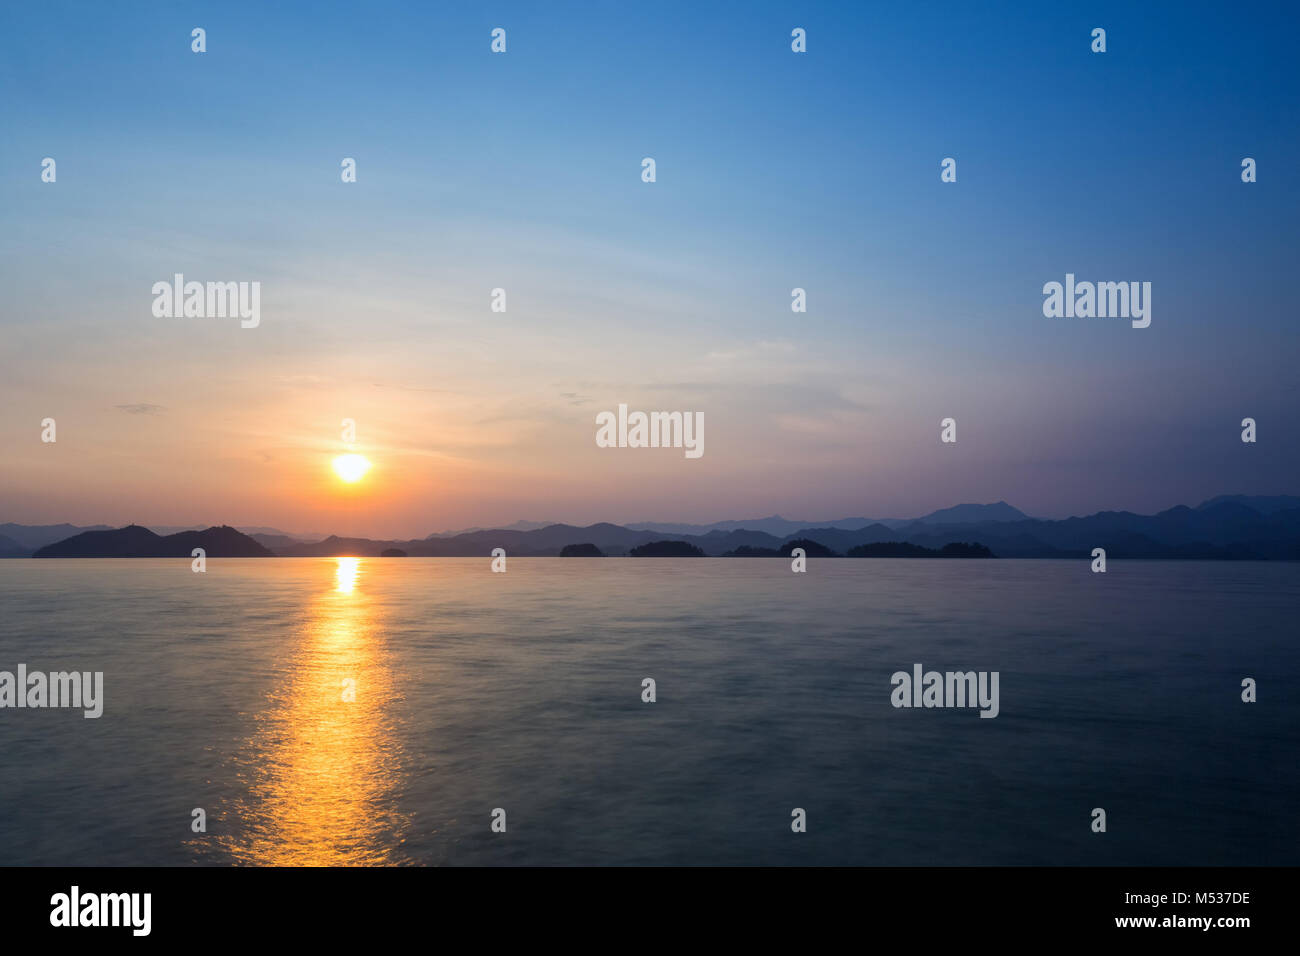 Hangzhou mille isole lago al tramonto Foto Stock